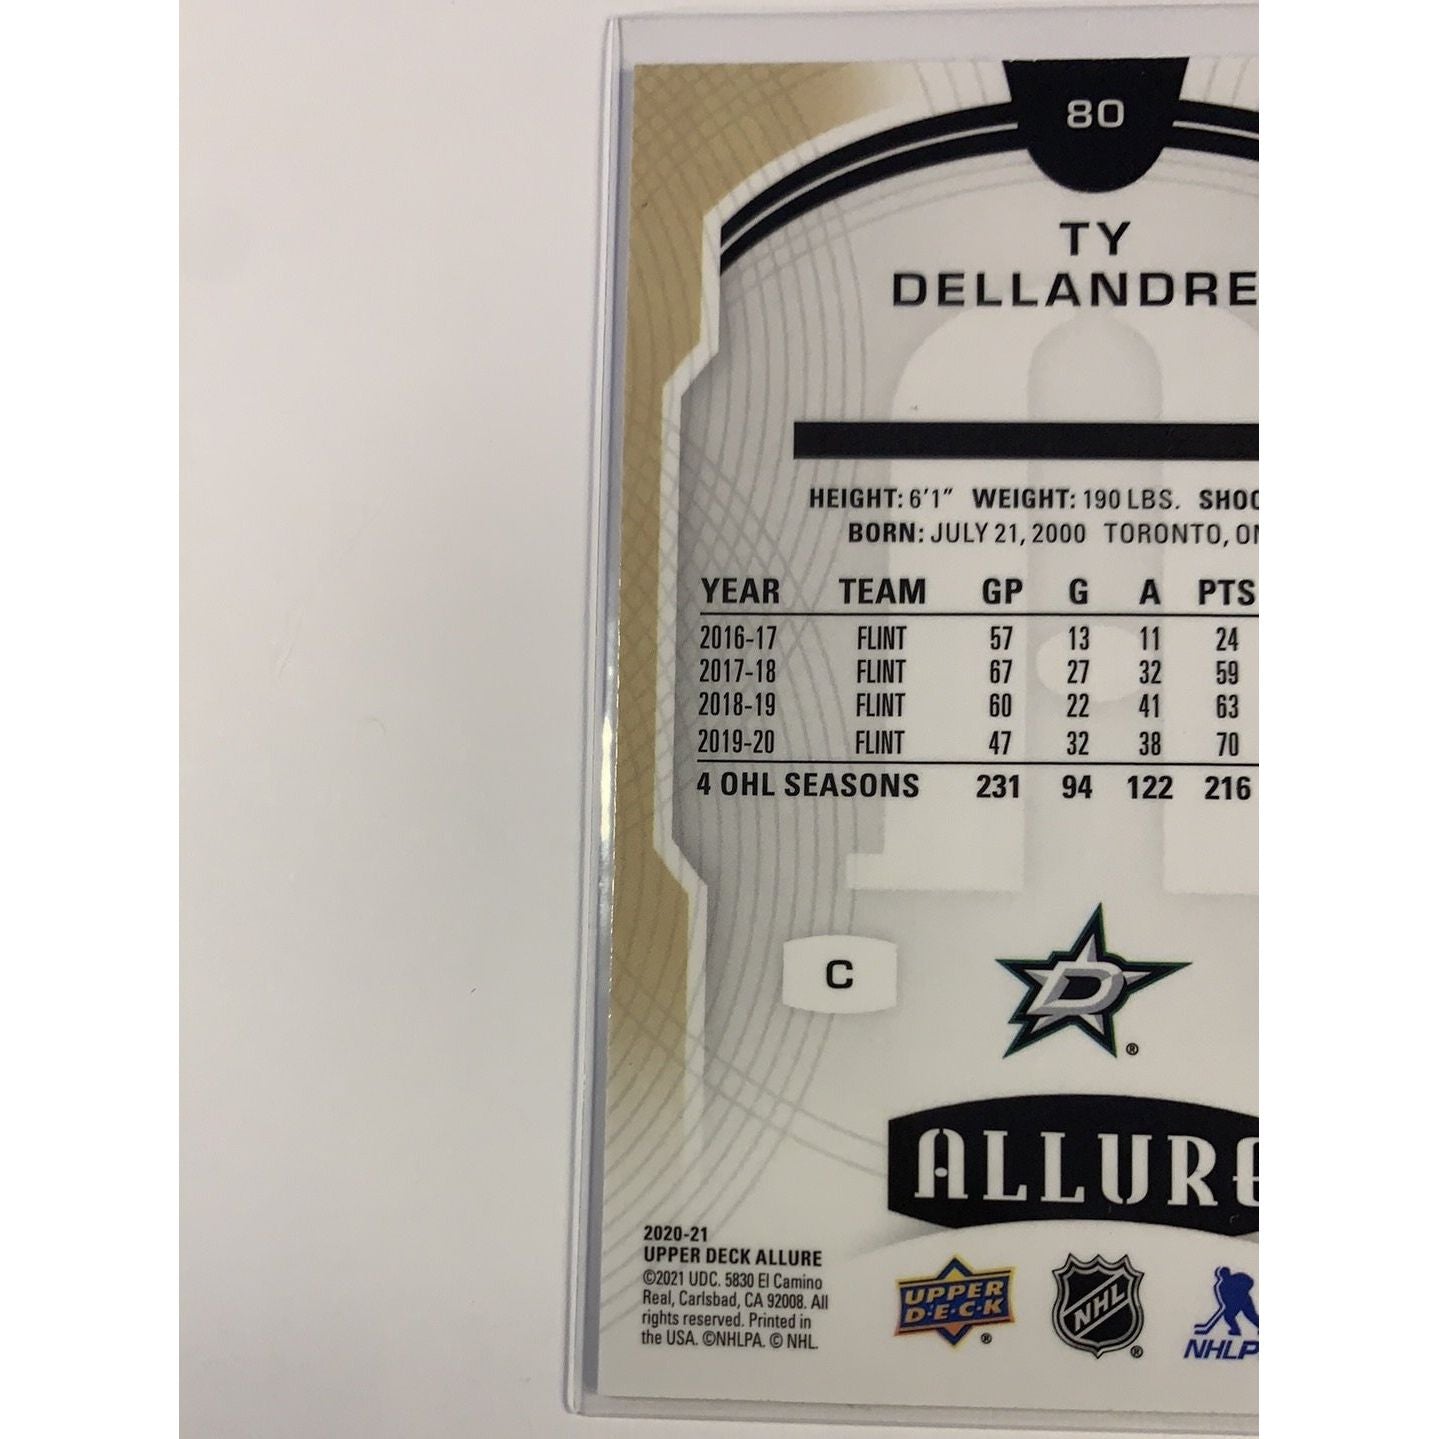  2020-21 Allure Ty Dellandrea Rookie Card  Local Legends Cards & Collectibles